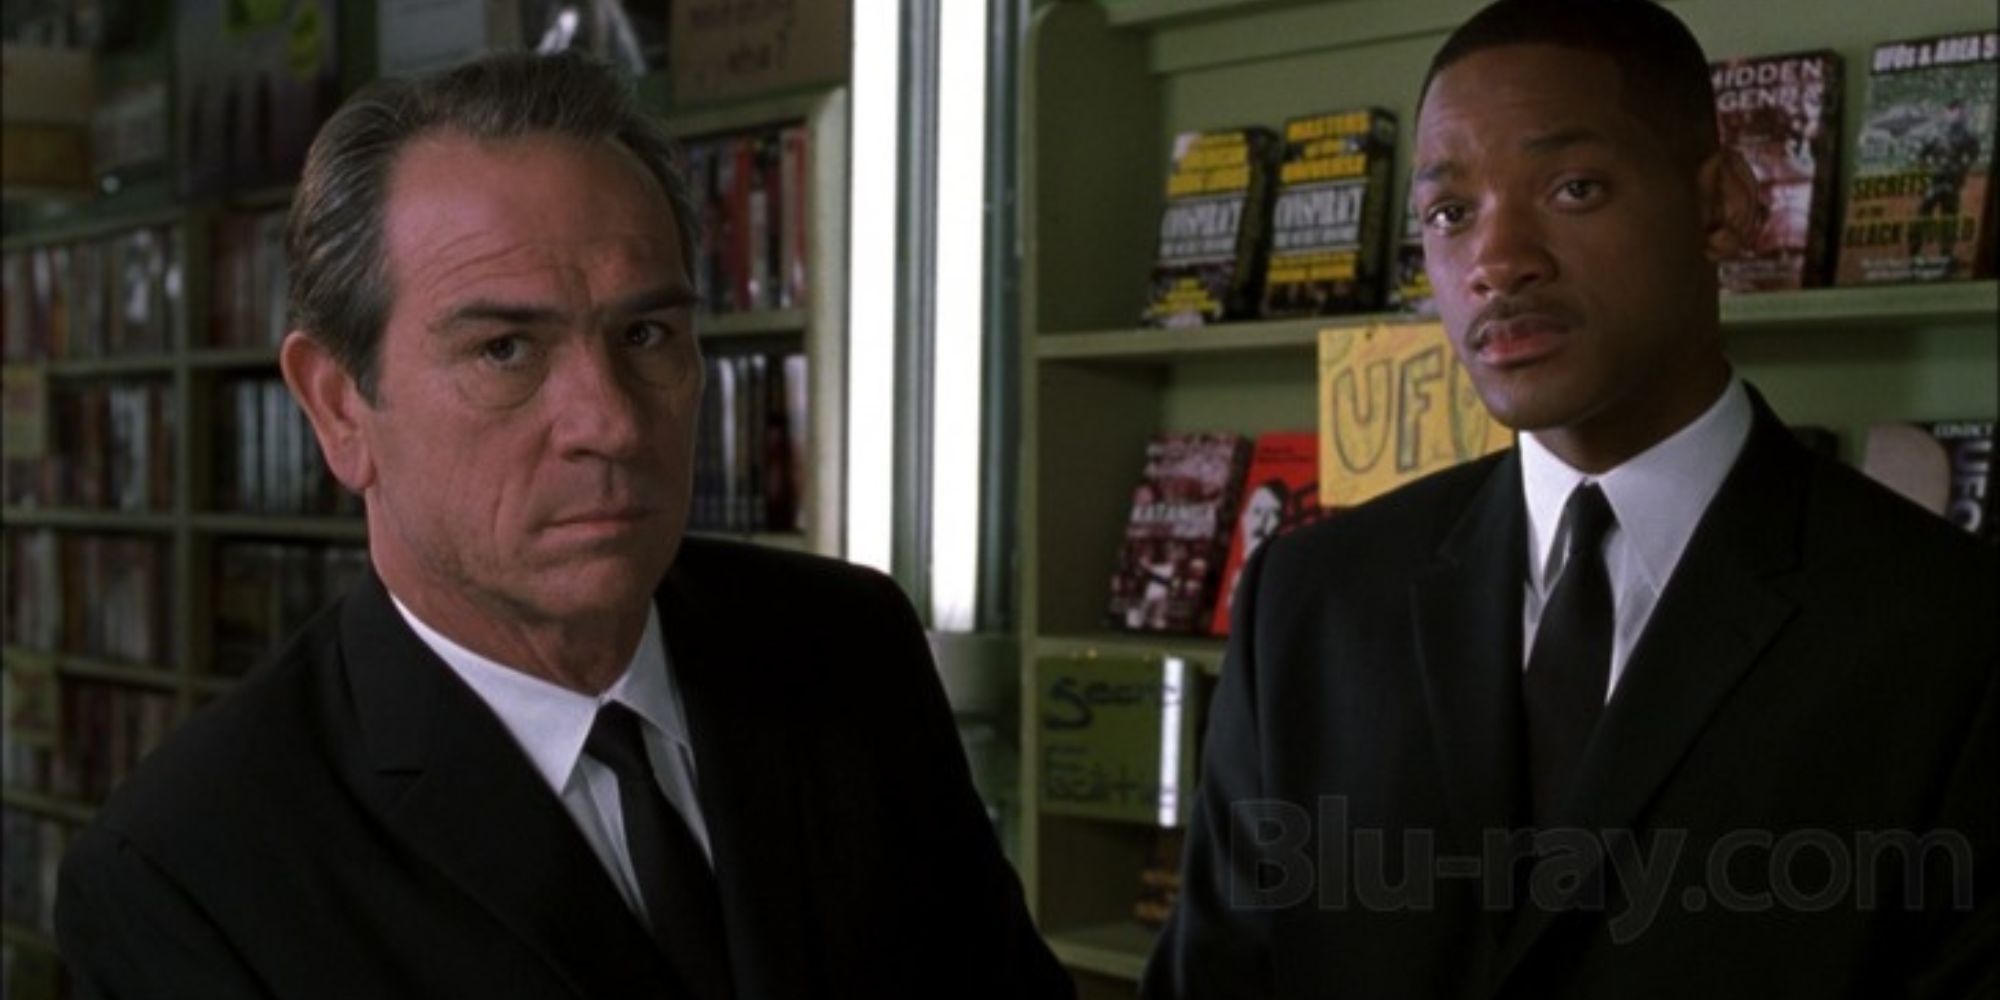 Agents K and J looking in intently ahead in Men in Black II (2002)